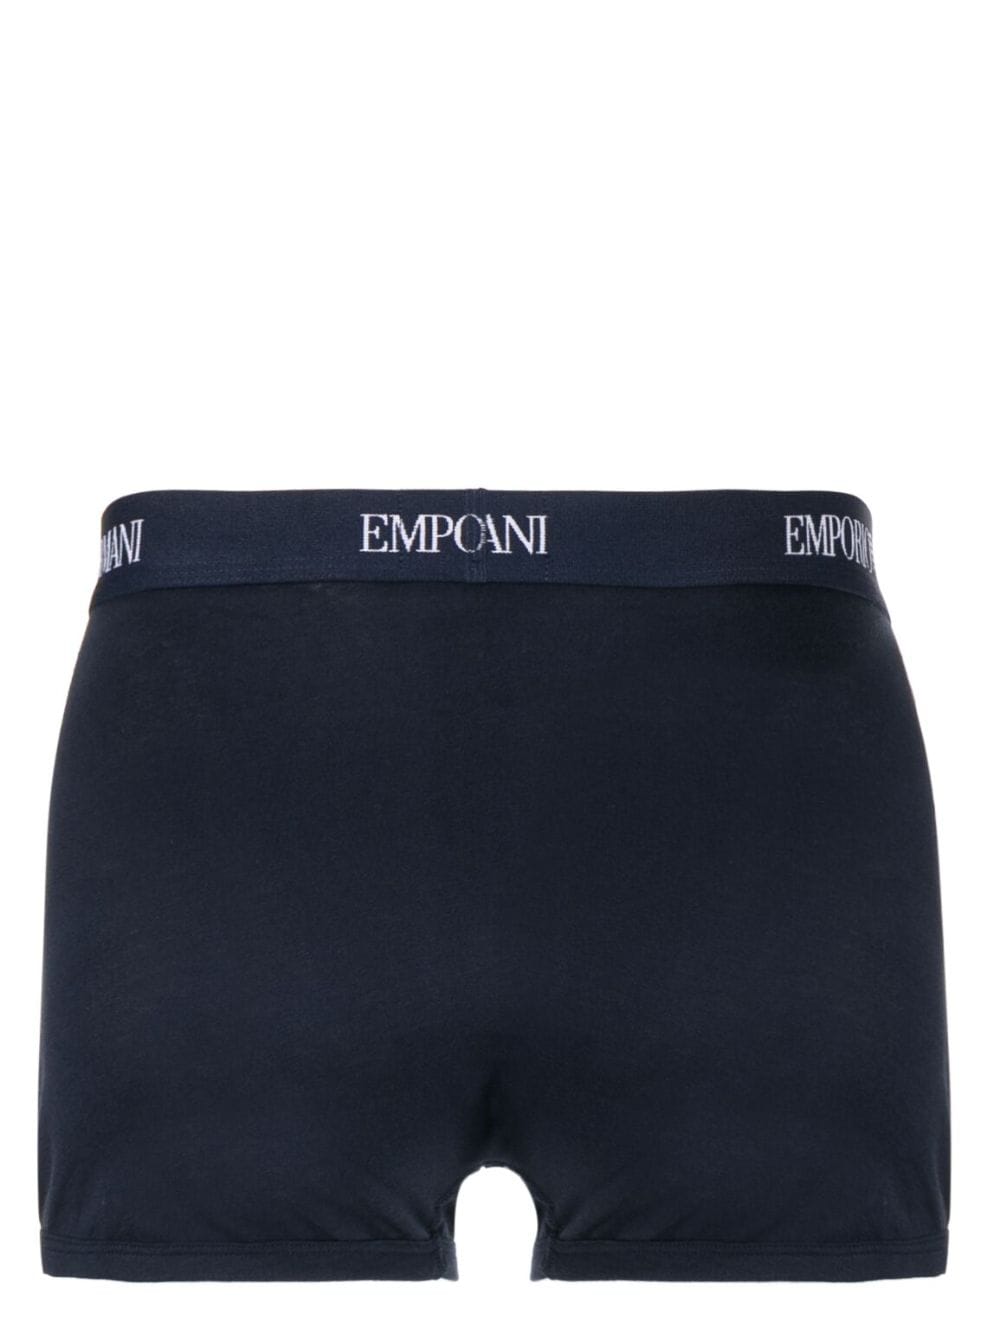 Emporio Armani logo-print Cotton Boxers Set - Farfetch